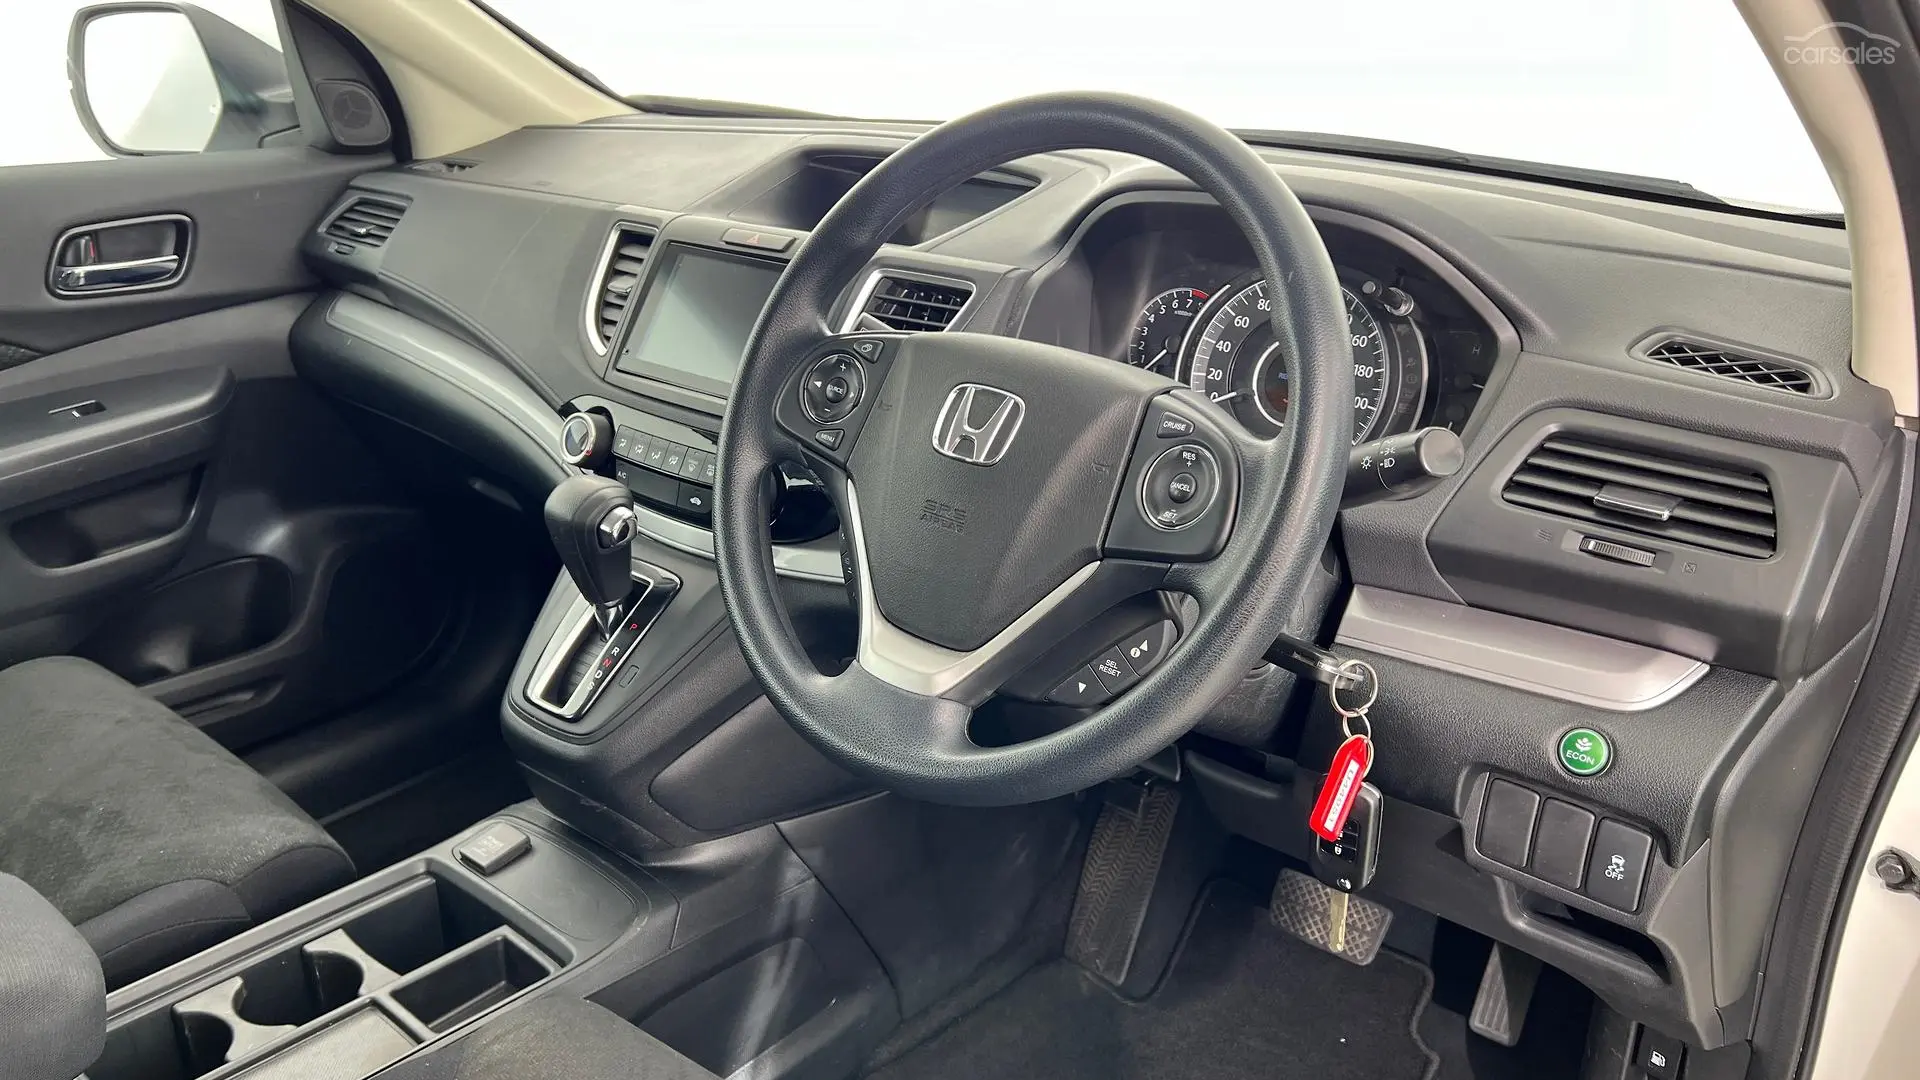 2017 Honda CR-V Image 3